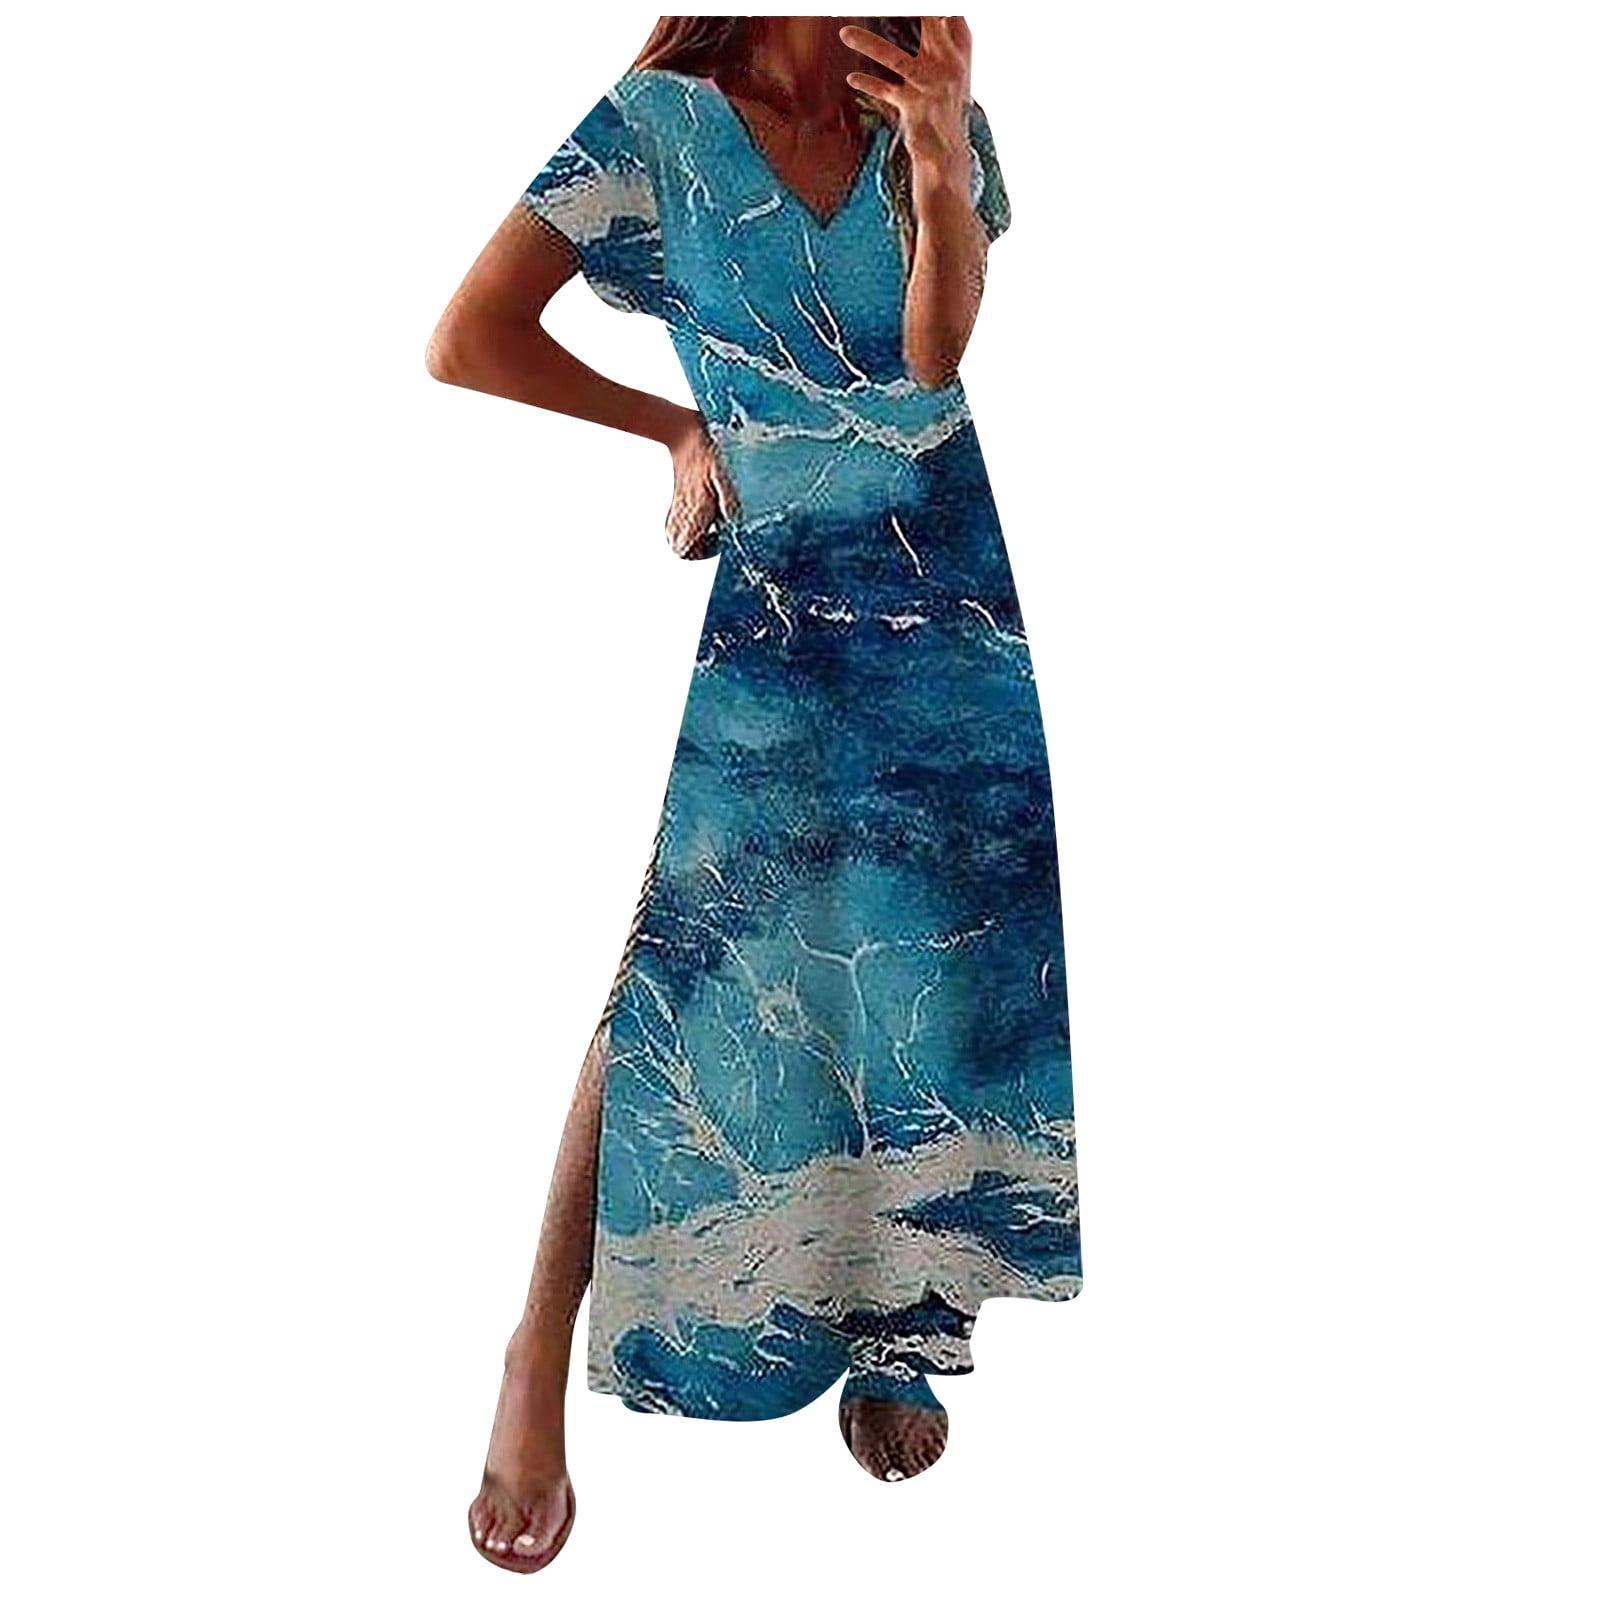 Ichuanyi Clearance Summer Dresses Women's Boho Summer Printed Short ...